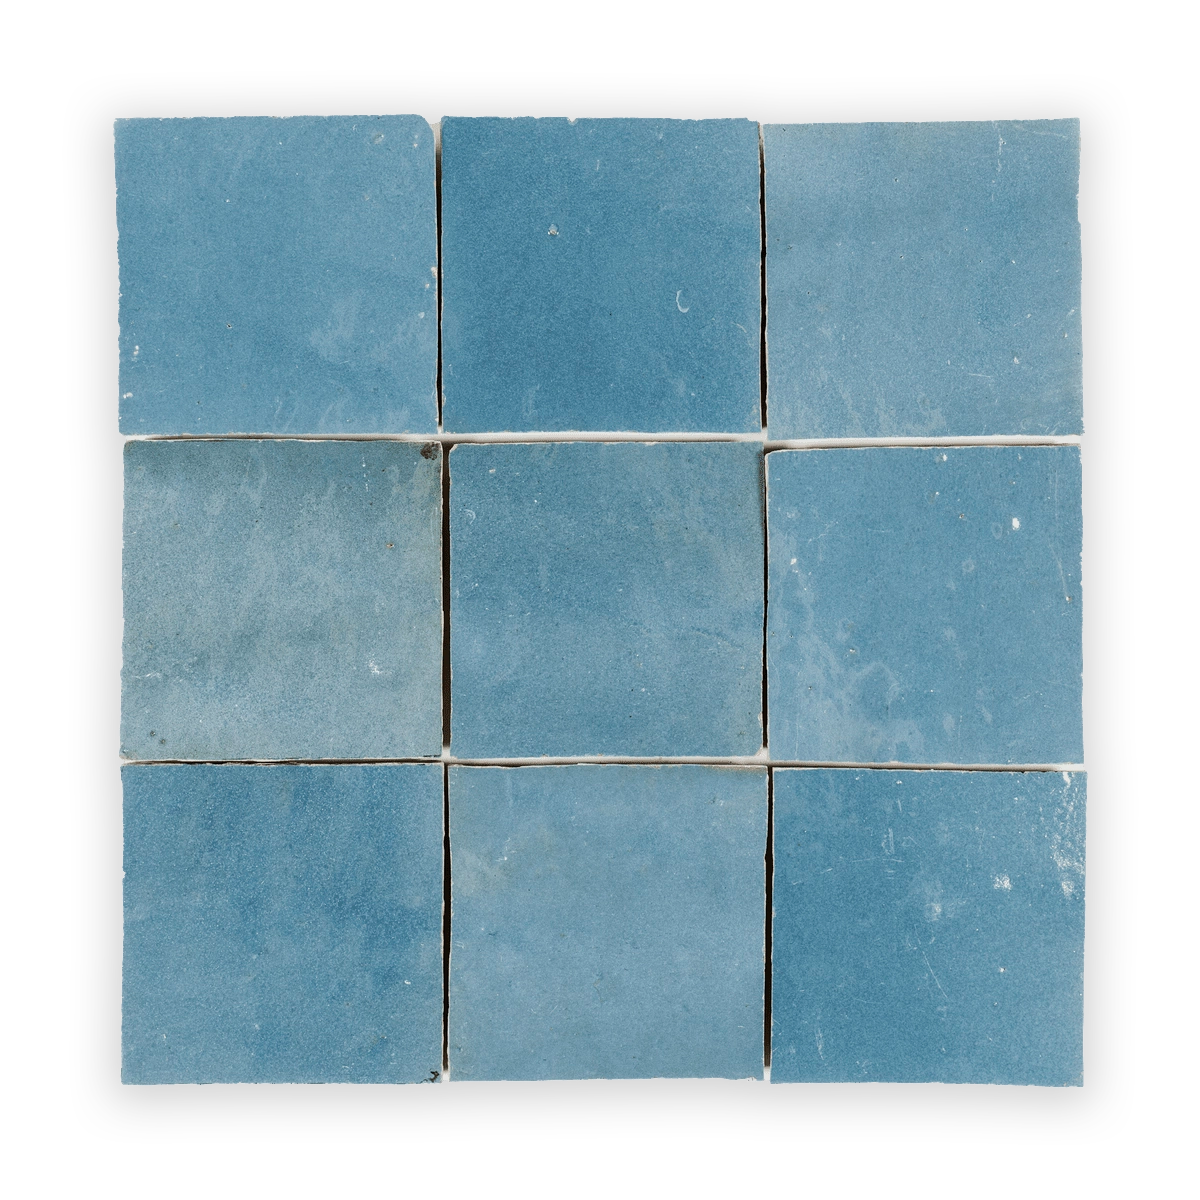 Morning Glory Zellige Ceramic Wall Tile 4x4